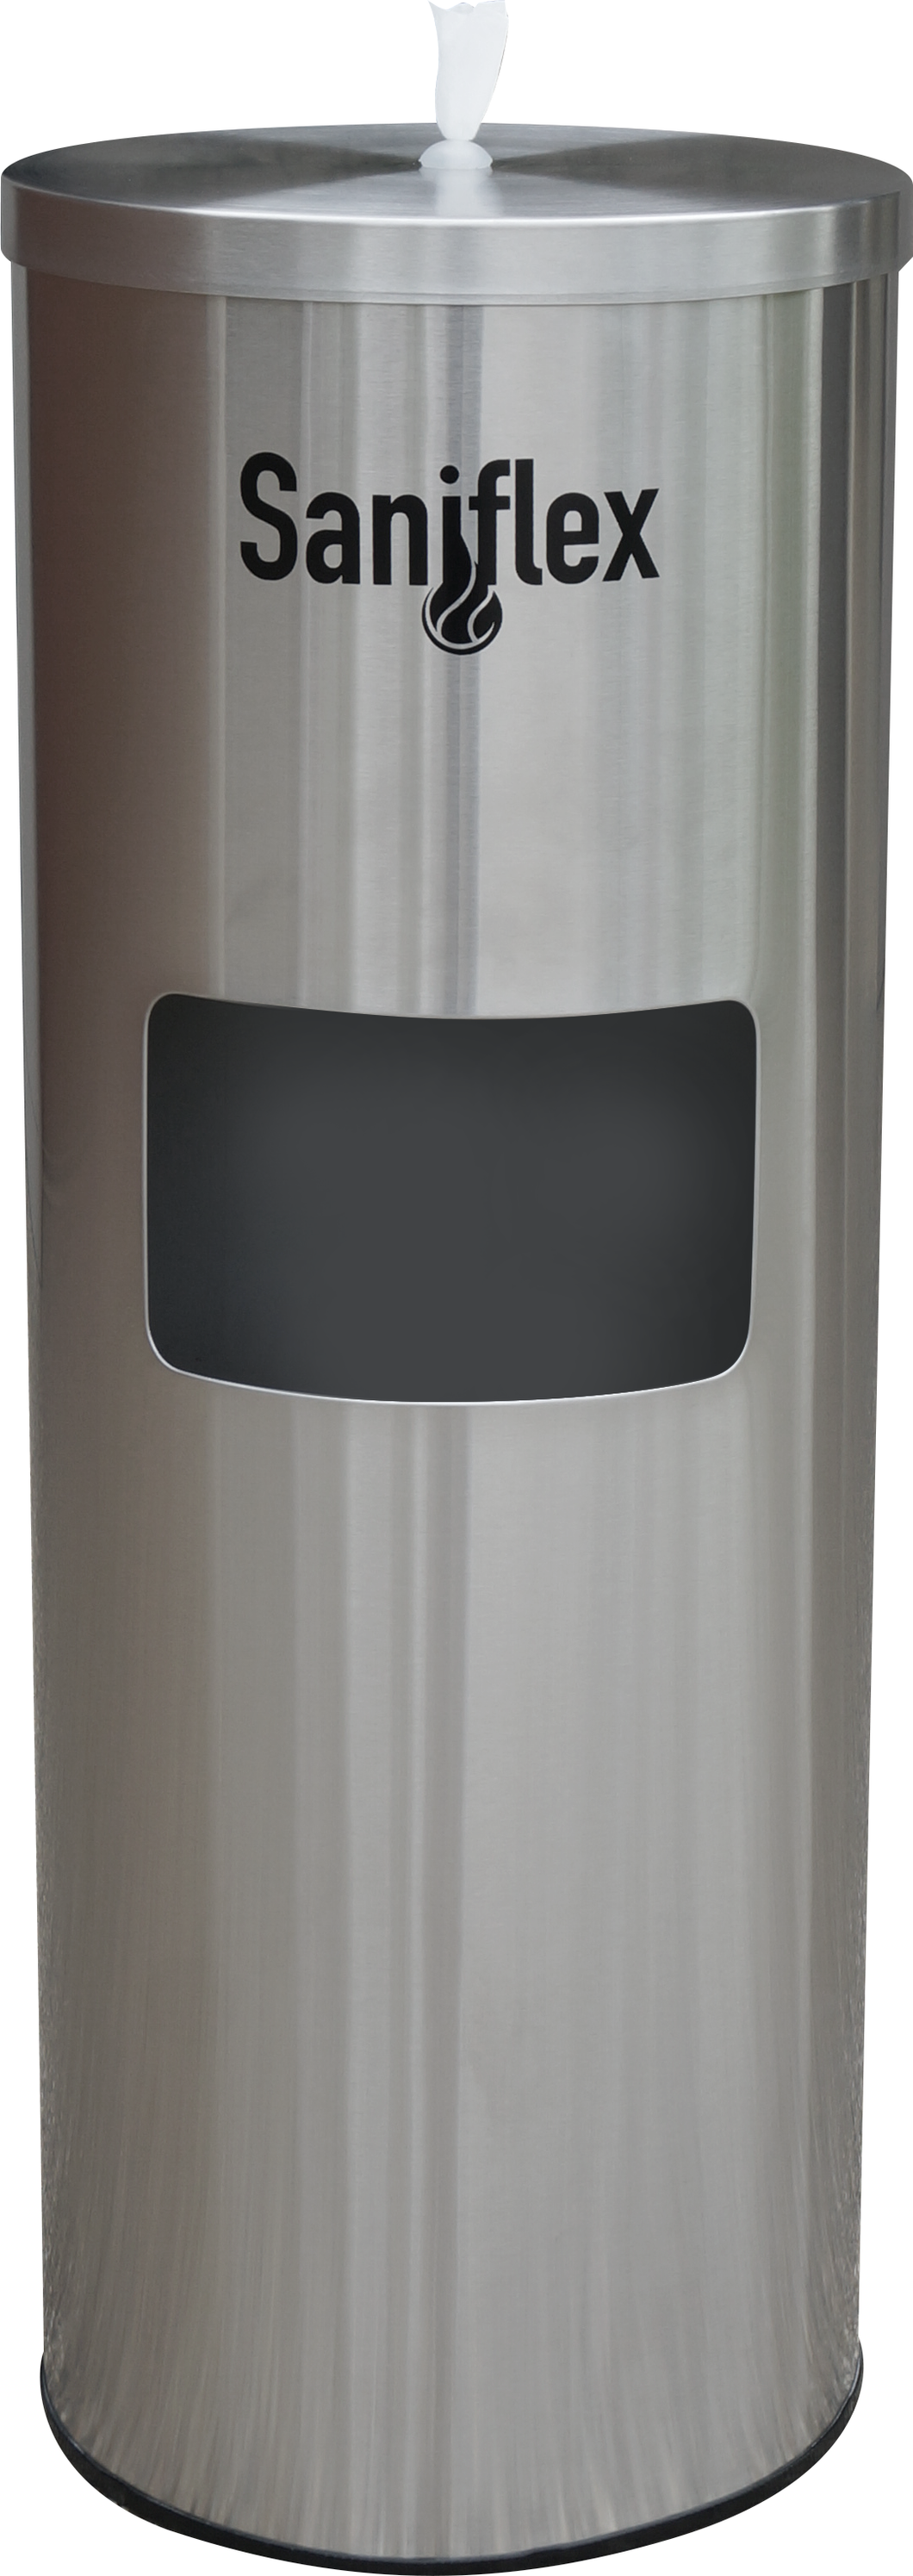 Stainless Steel Dispenser Unit Silver